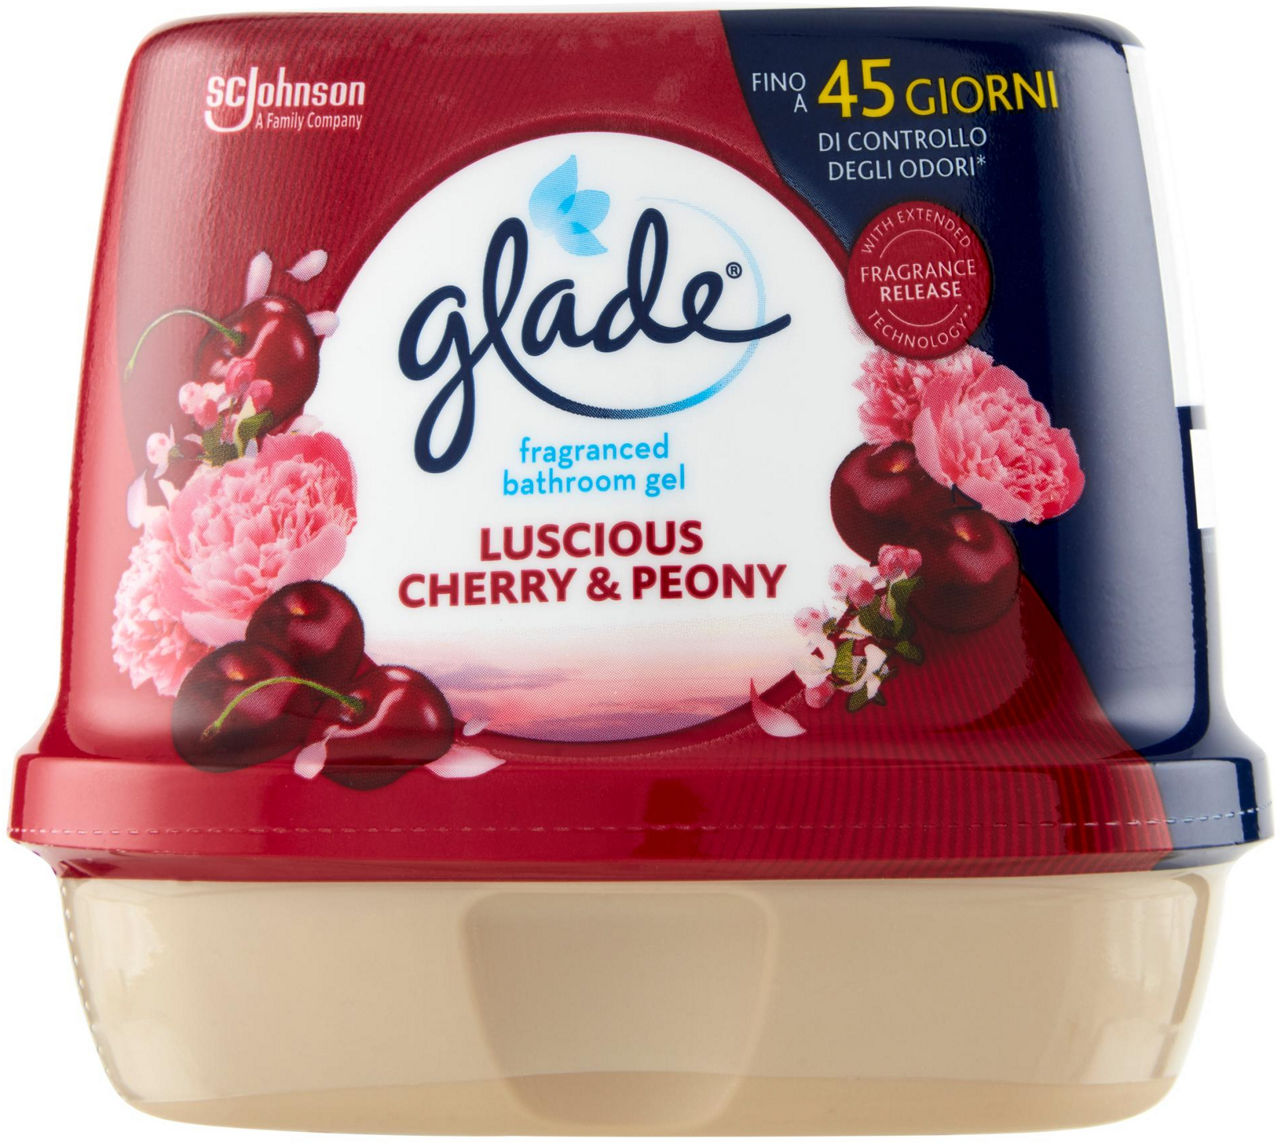 Deodorante ambiente bagno glade fragranced gel peony & cherry gr 180 pz.1